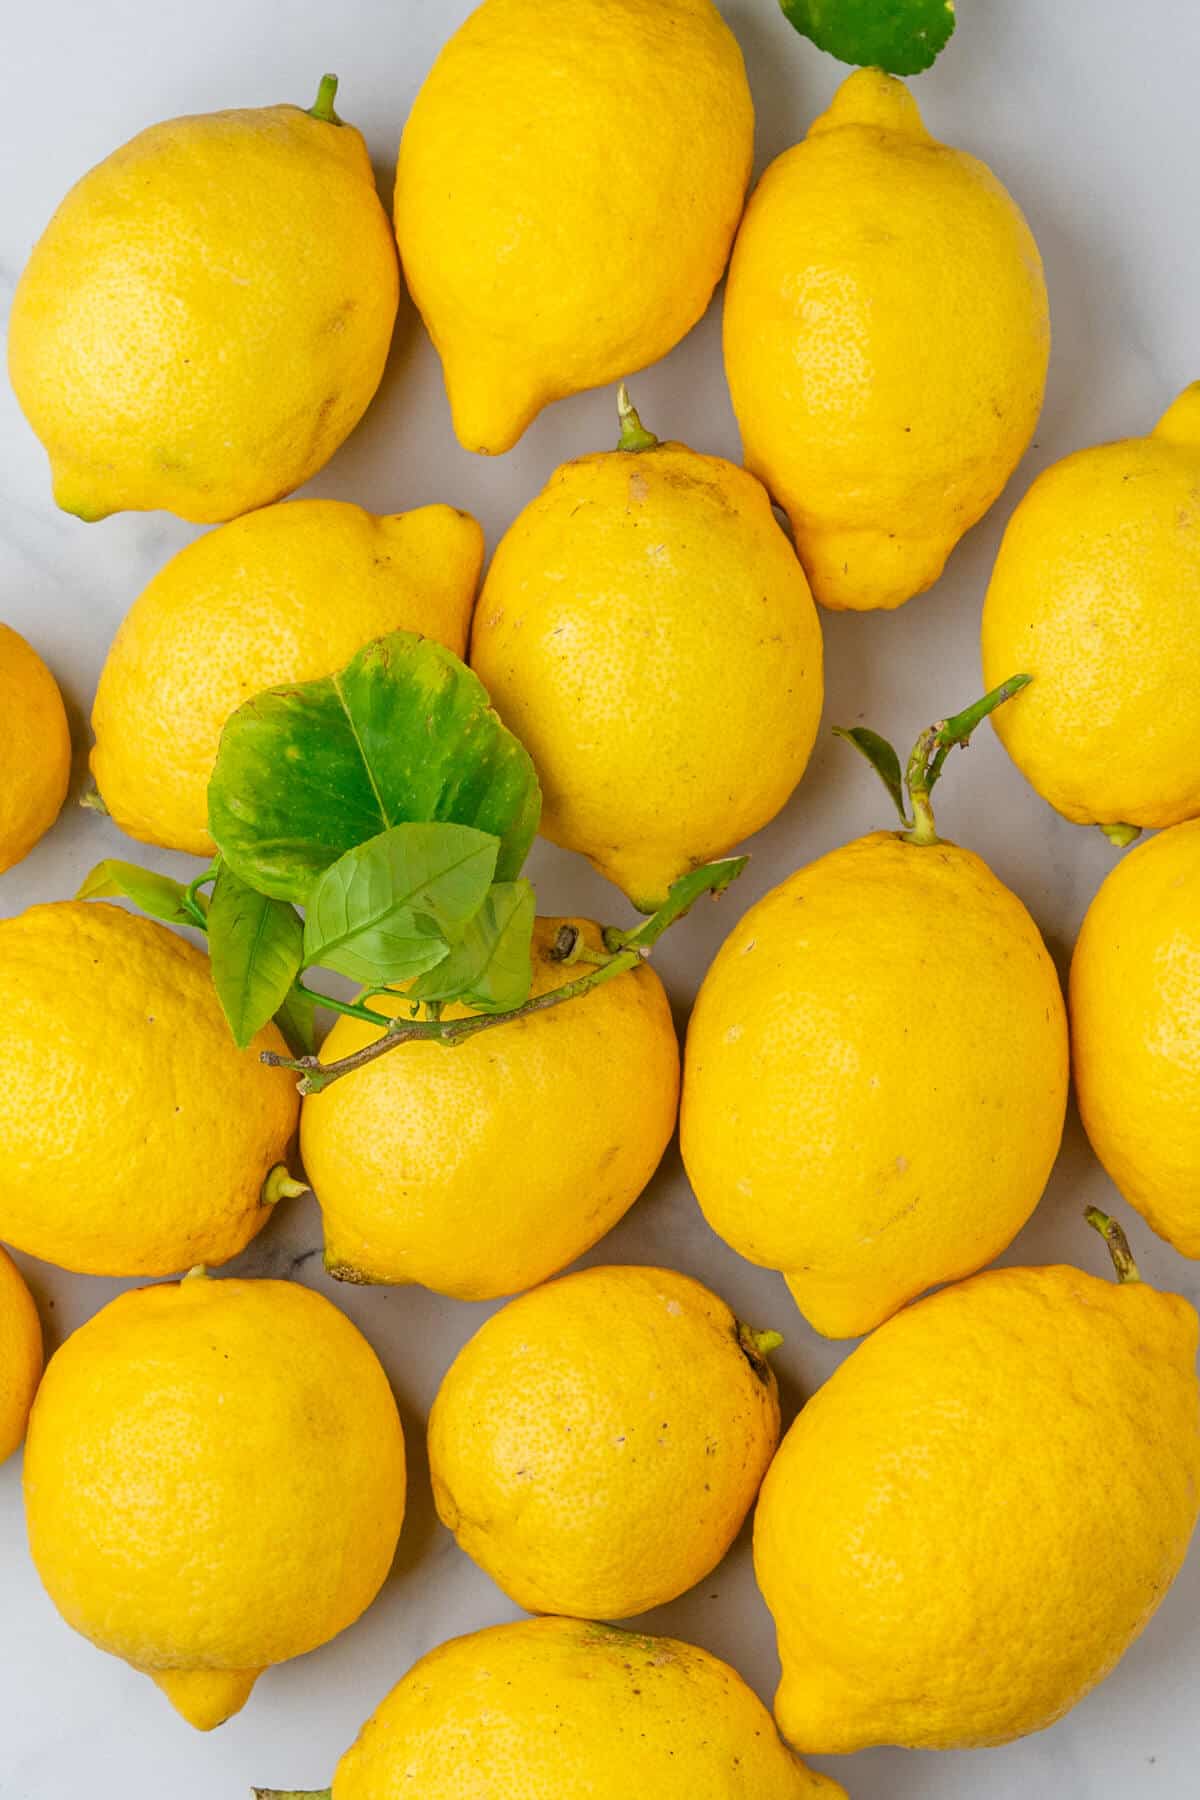 Bunch of fresh whole lemons